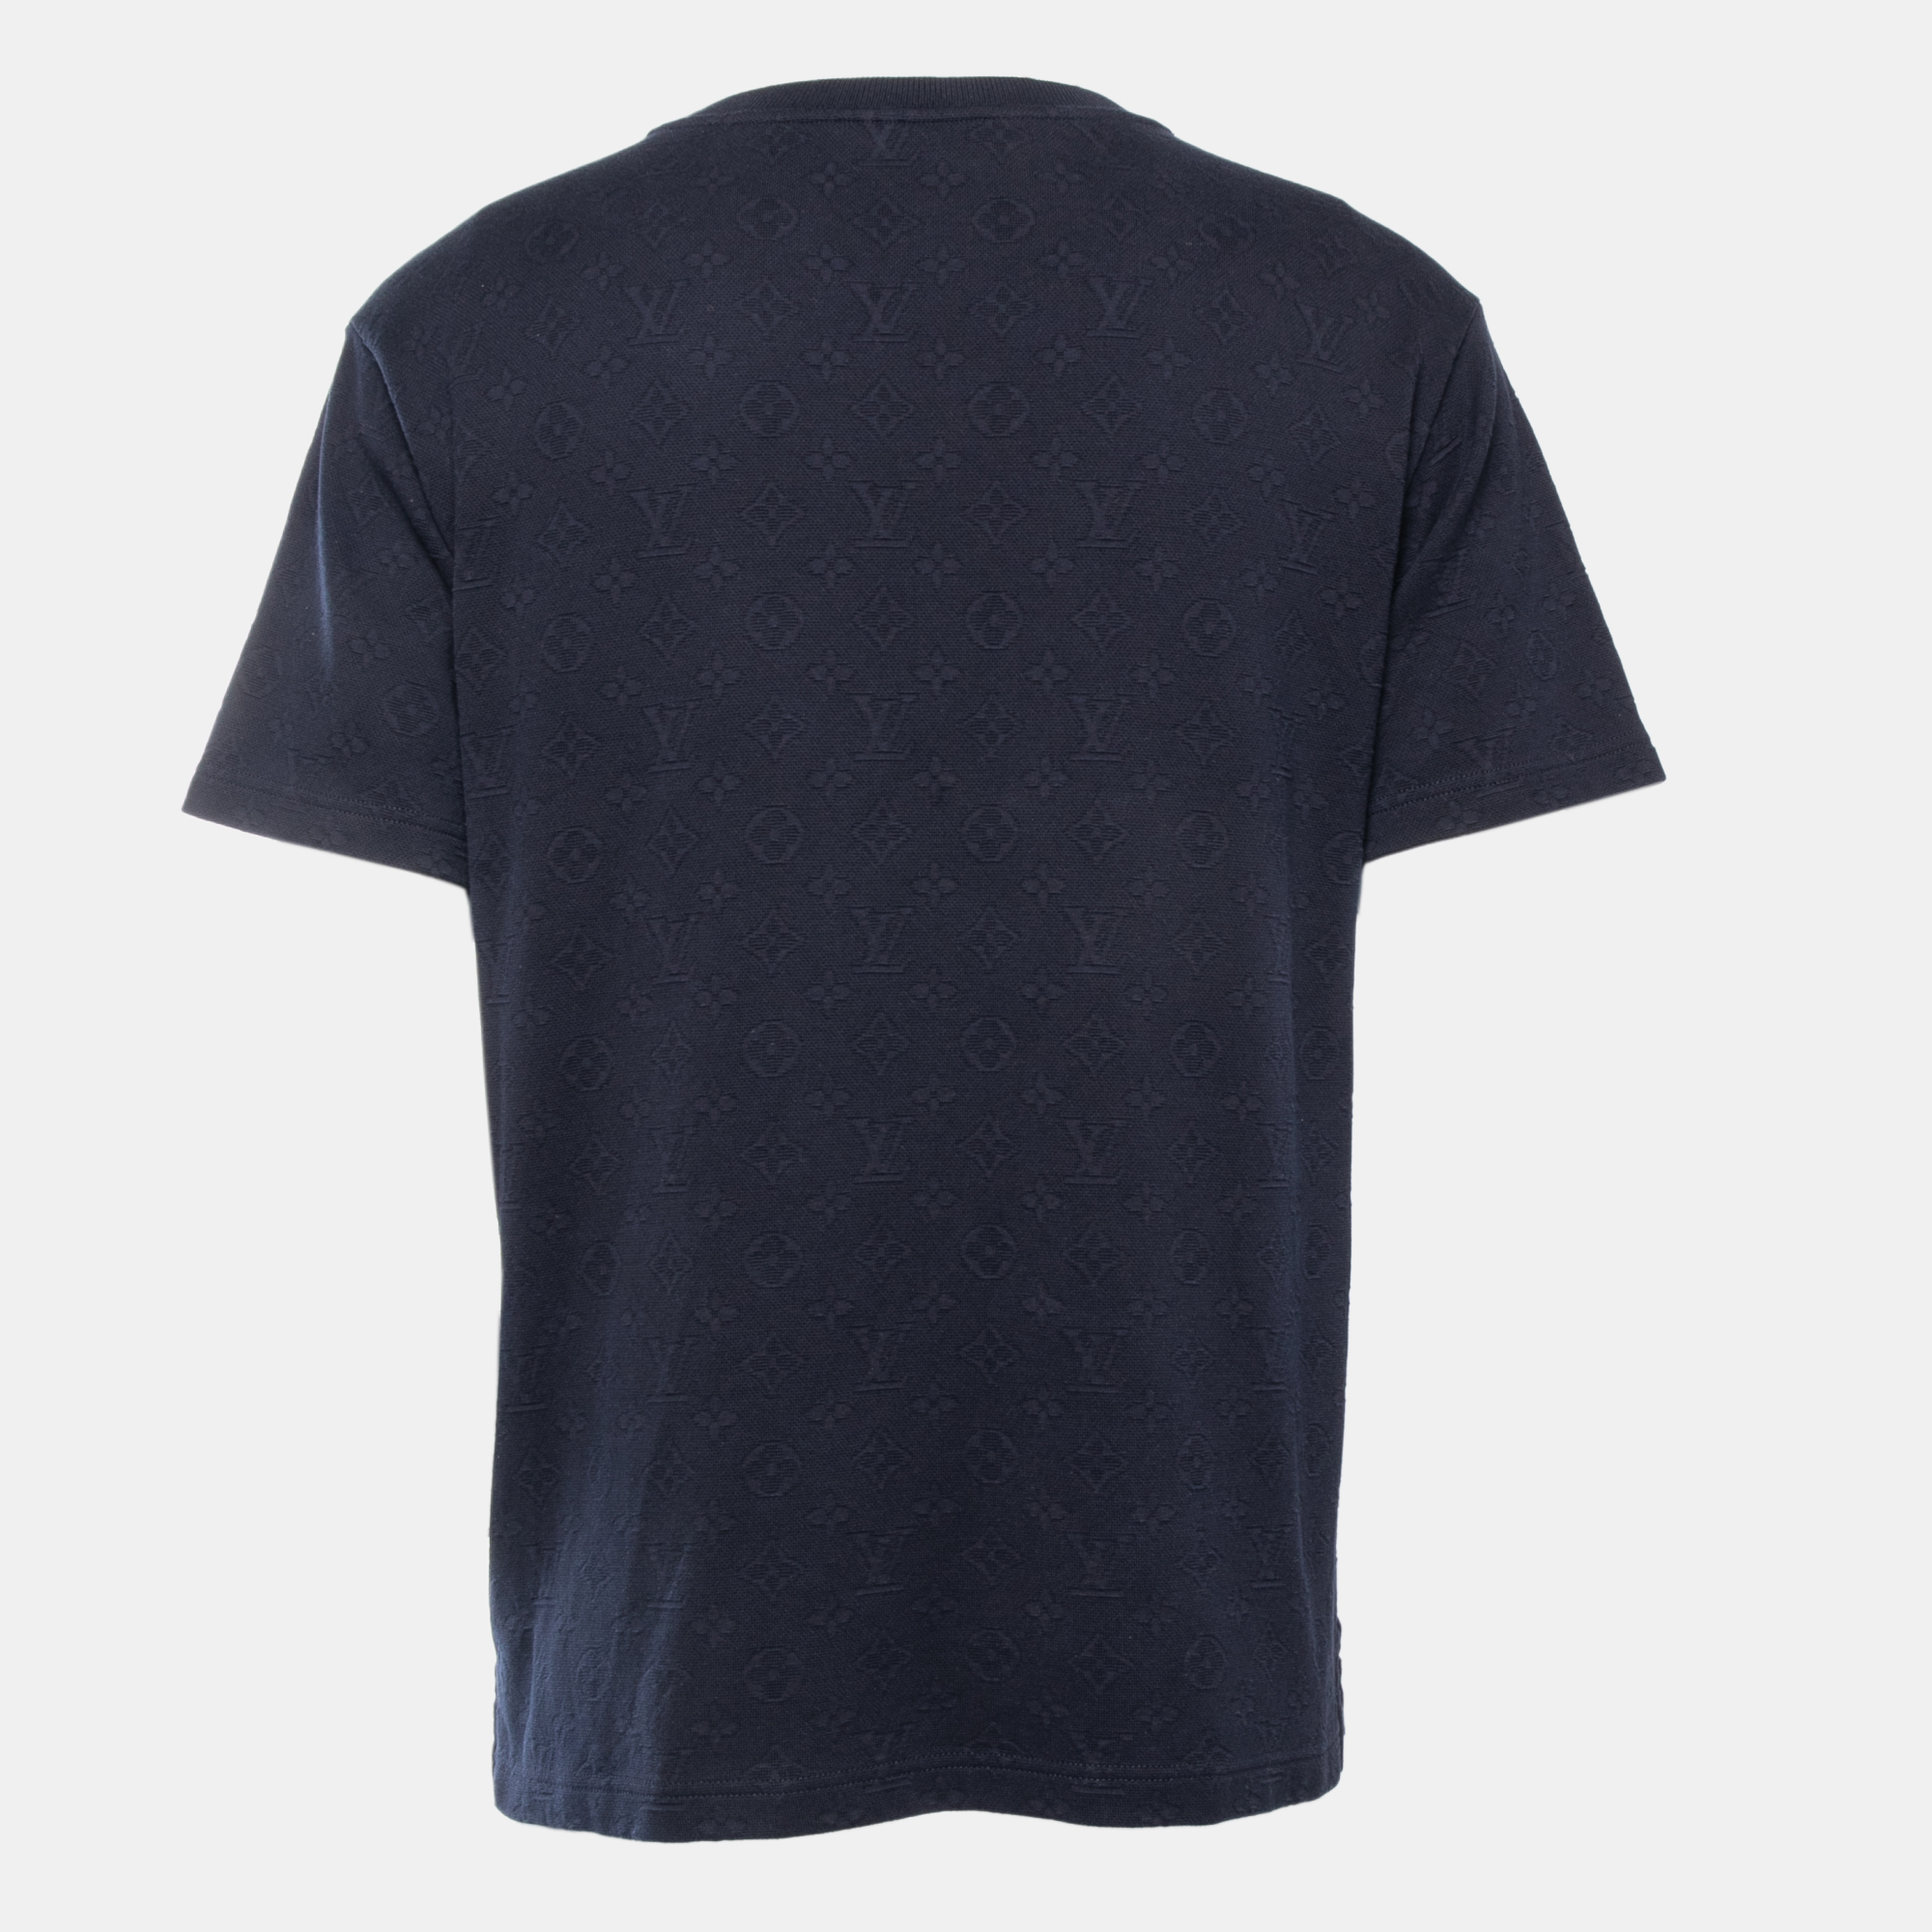 

Louis Vuitton Monogram Cotton Crew Neck Half Sleeve T-Shirt, Navy blue